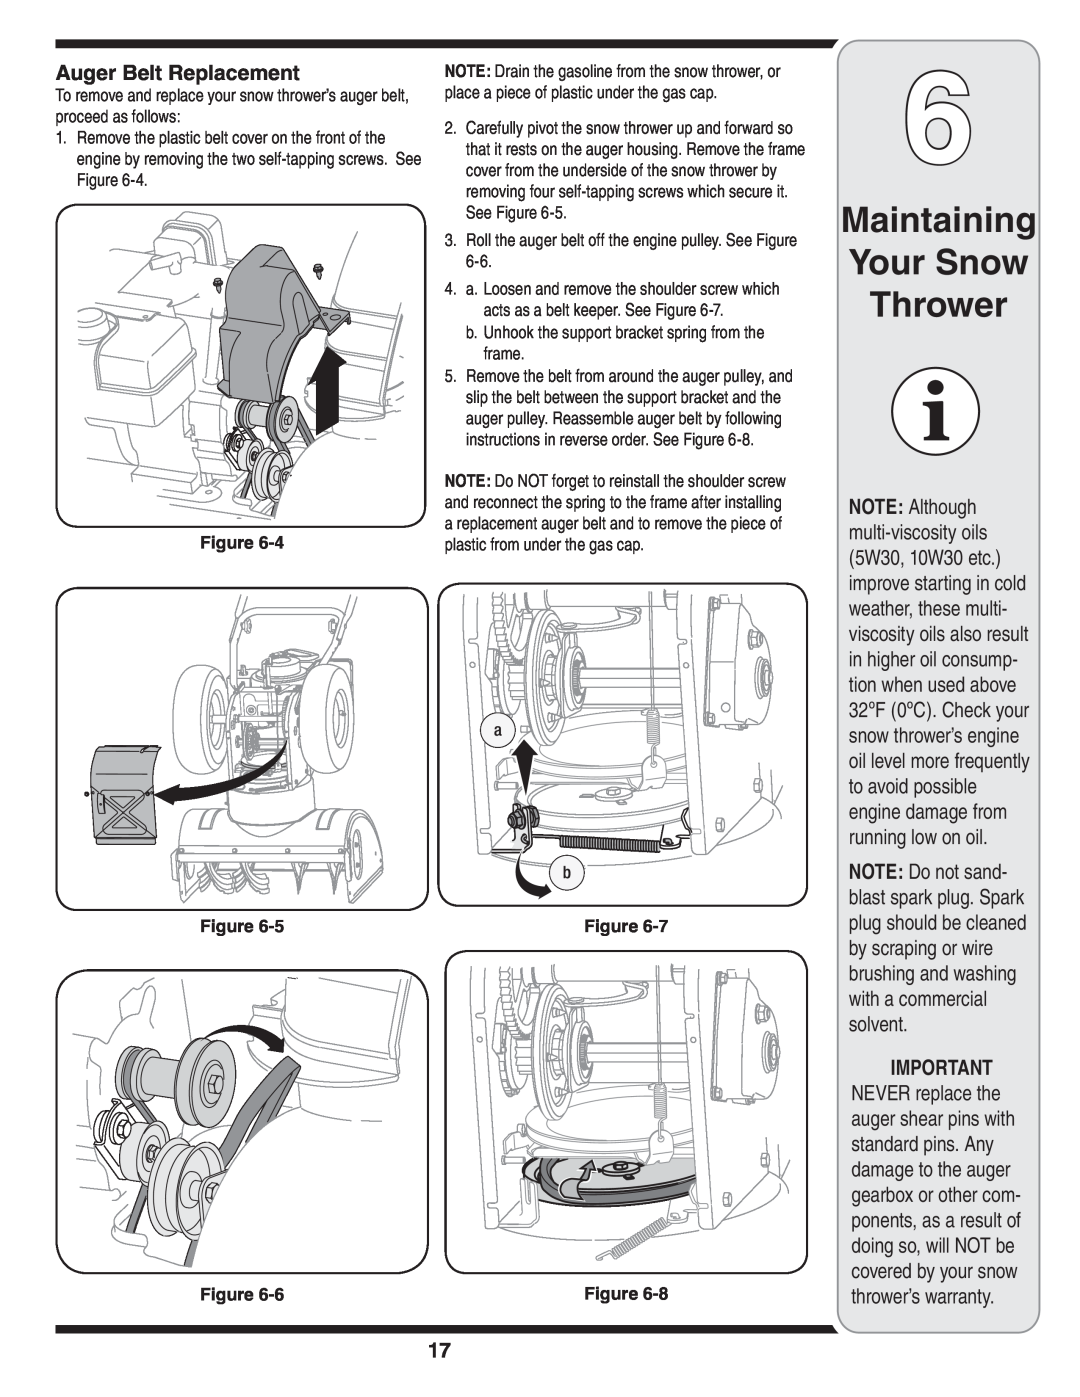 MTD 769-03265 warranty Maintaining Your Snow Thrower, Auger Belt Replacement, Figure Figure Figure 